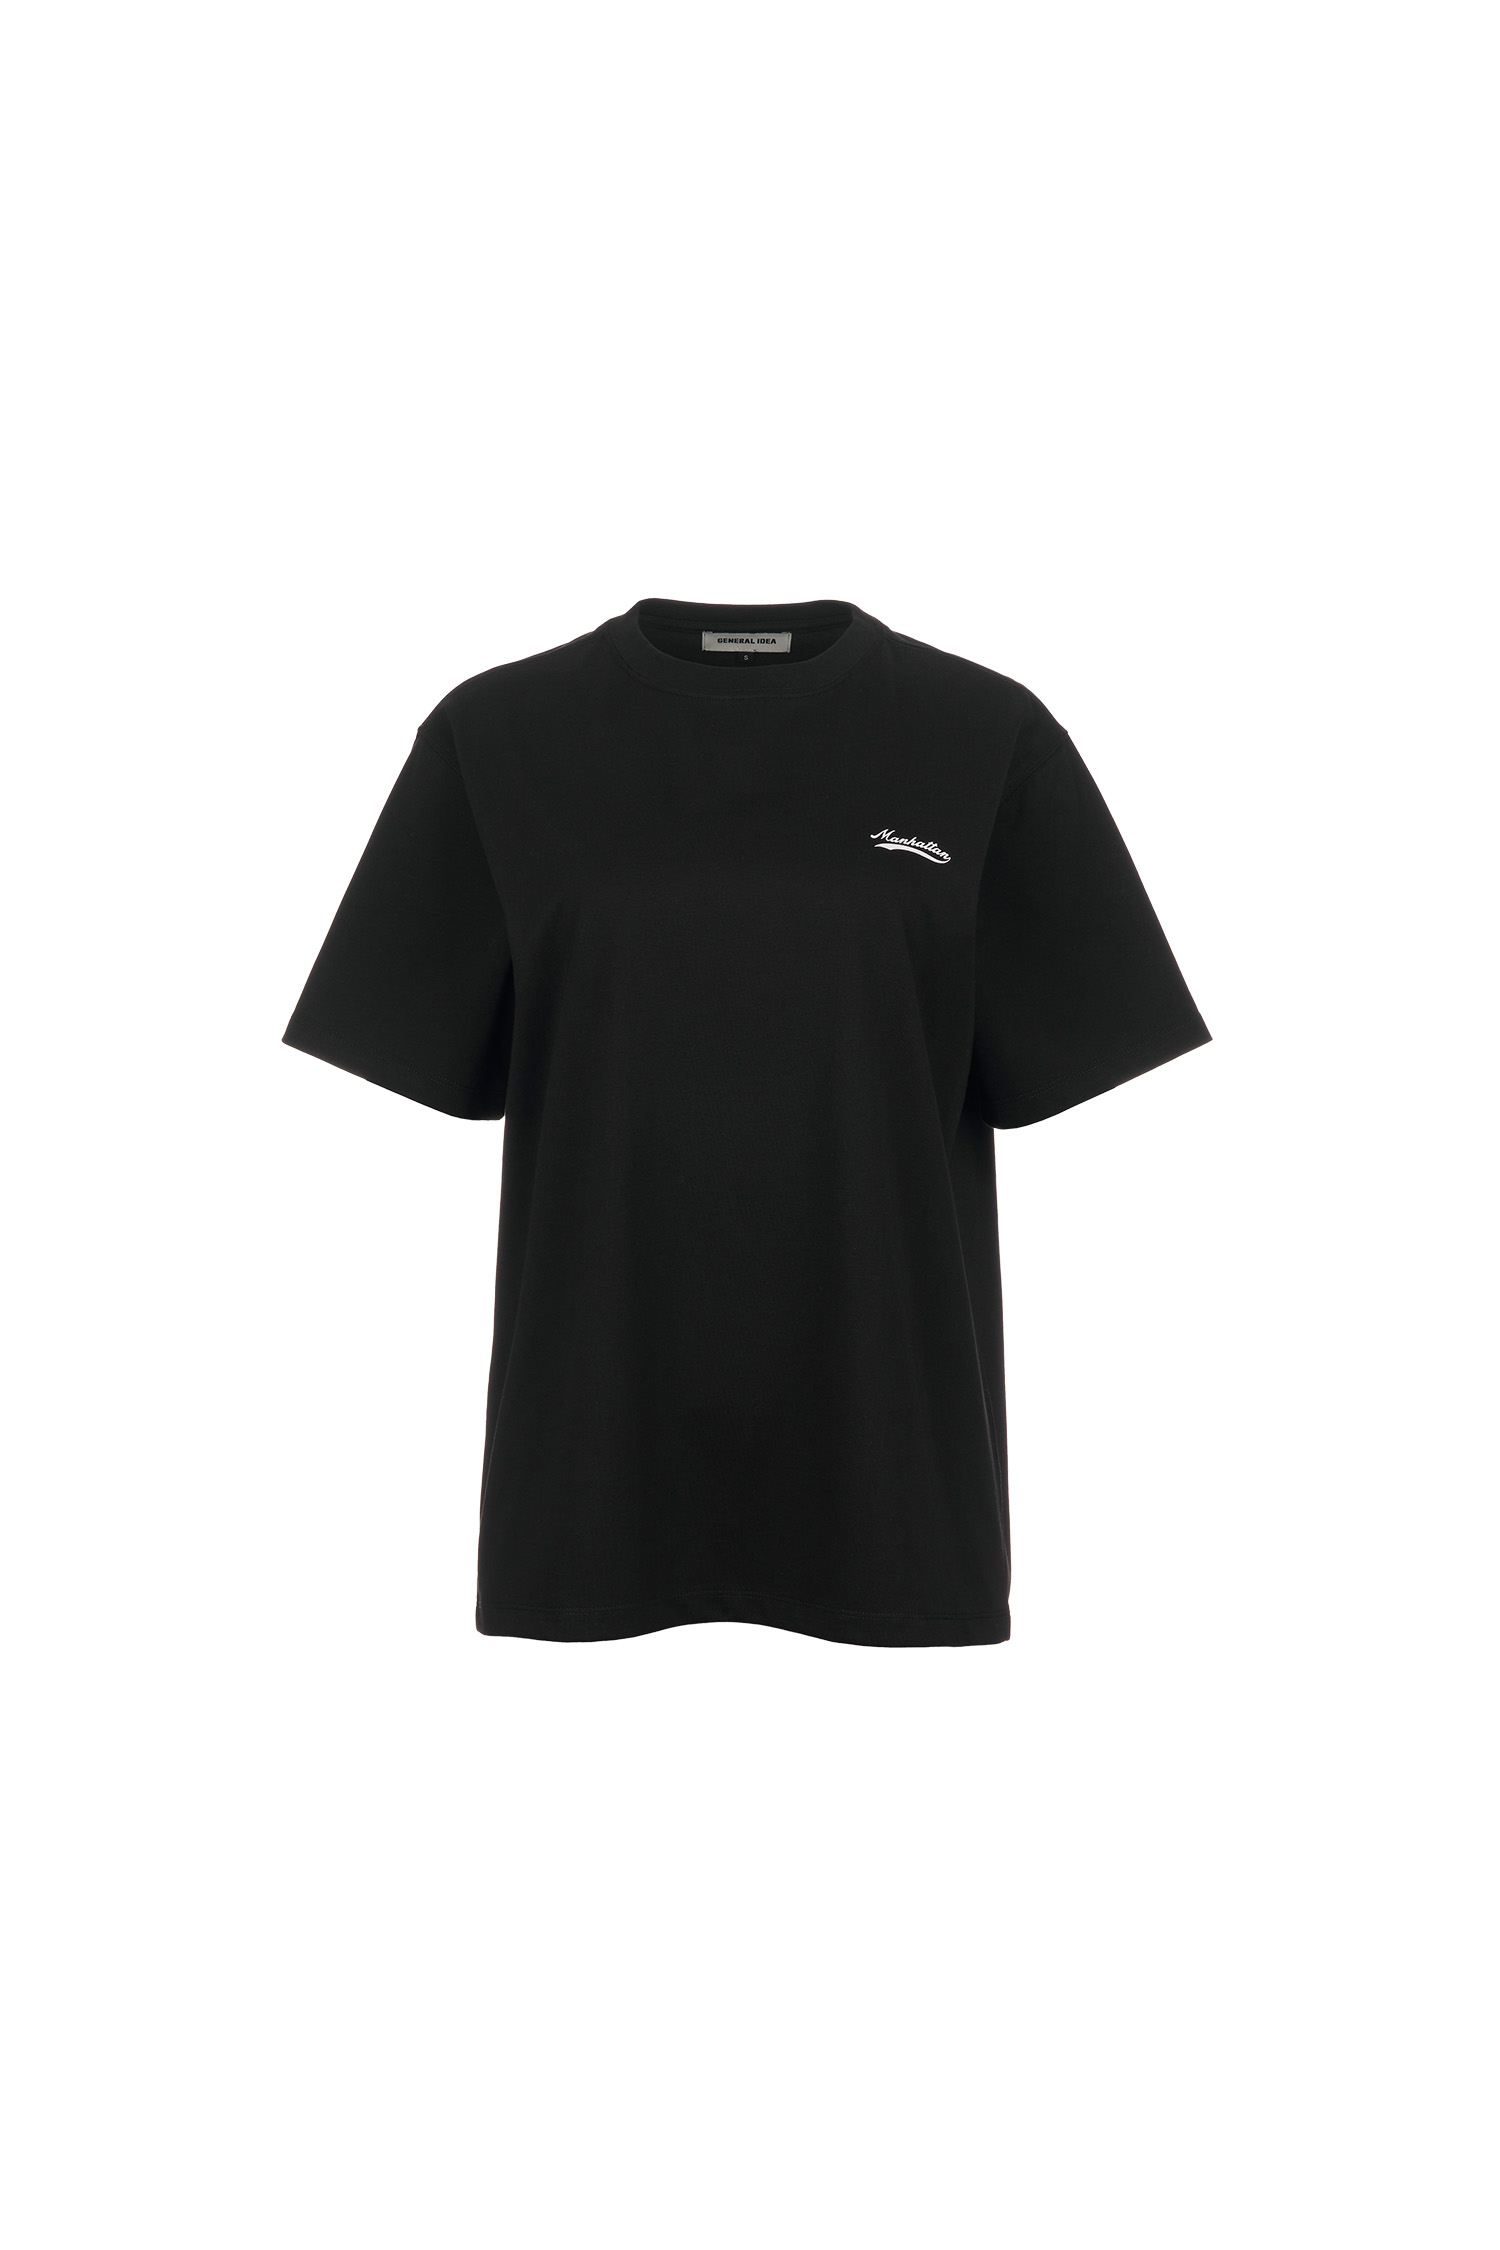 UNISEX マンハッタン半袖Tシャツ [BLACK]